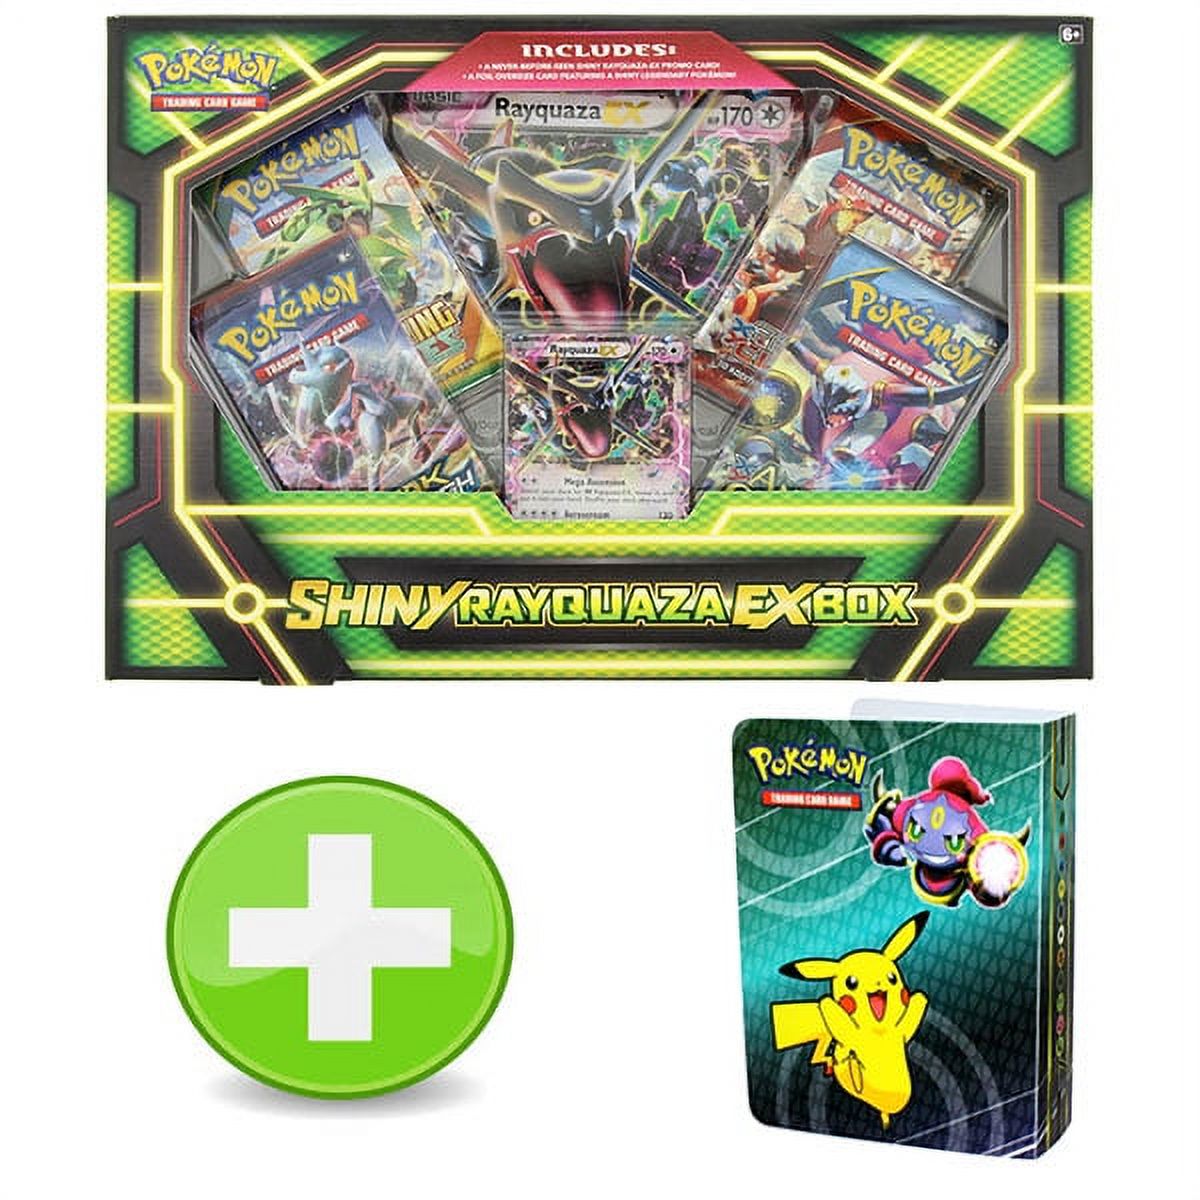 Pokemon Shiny Rayquaza EX Box with 1 Hoopa and Pikachu Mini Binder